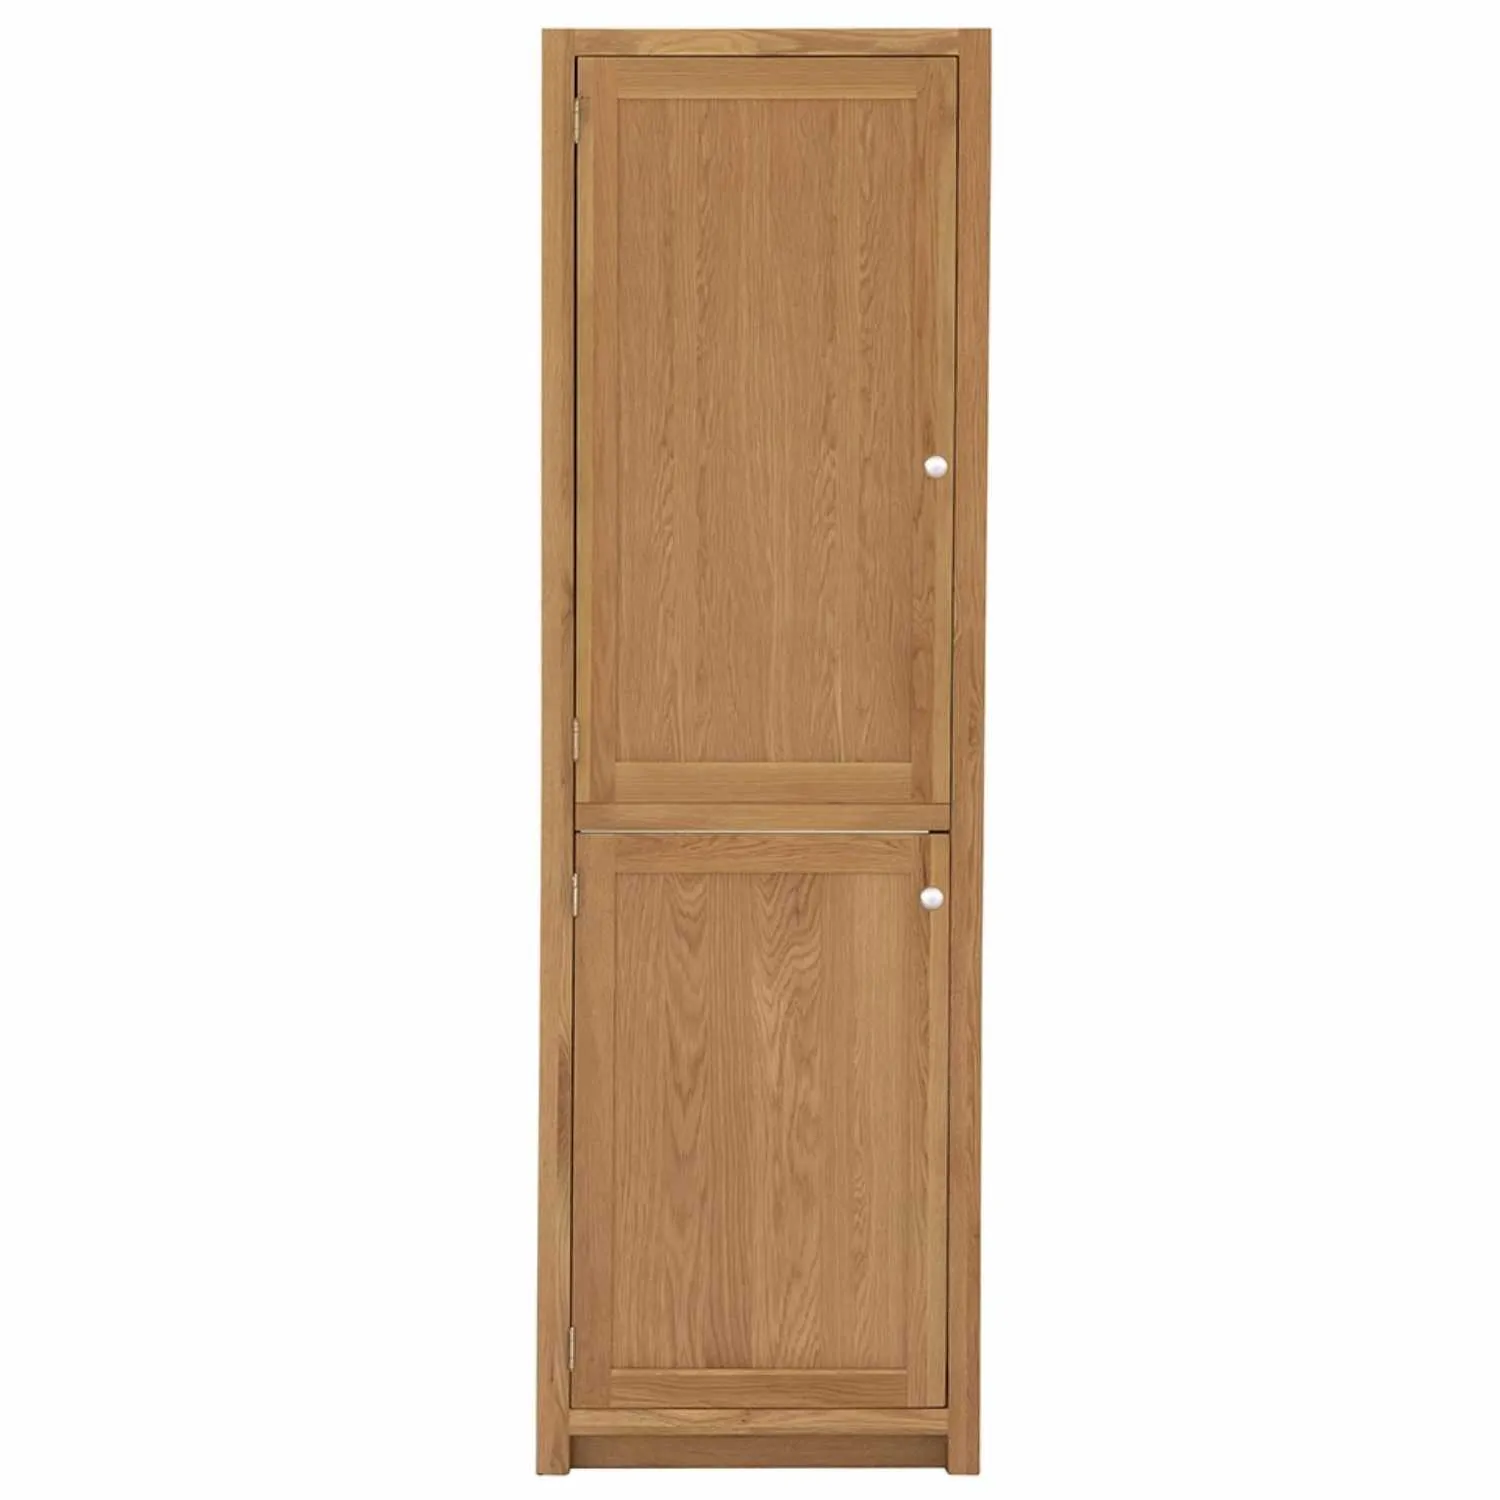 Traditional Style Handmade Oak Wood Fridge Freezer Kitchen Storage Cabinet With Shelf 69 x 216cm